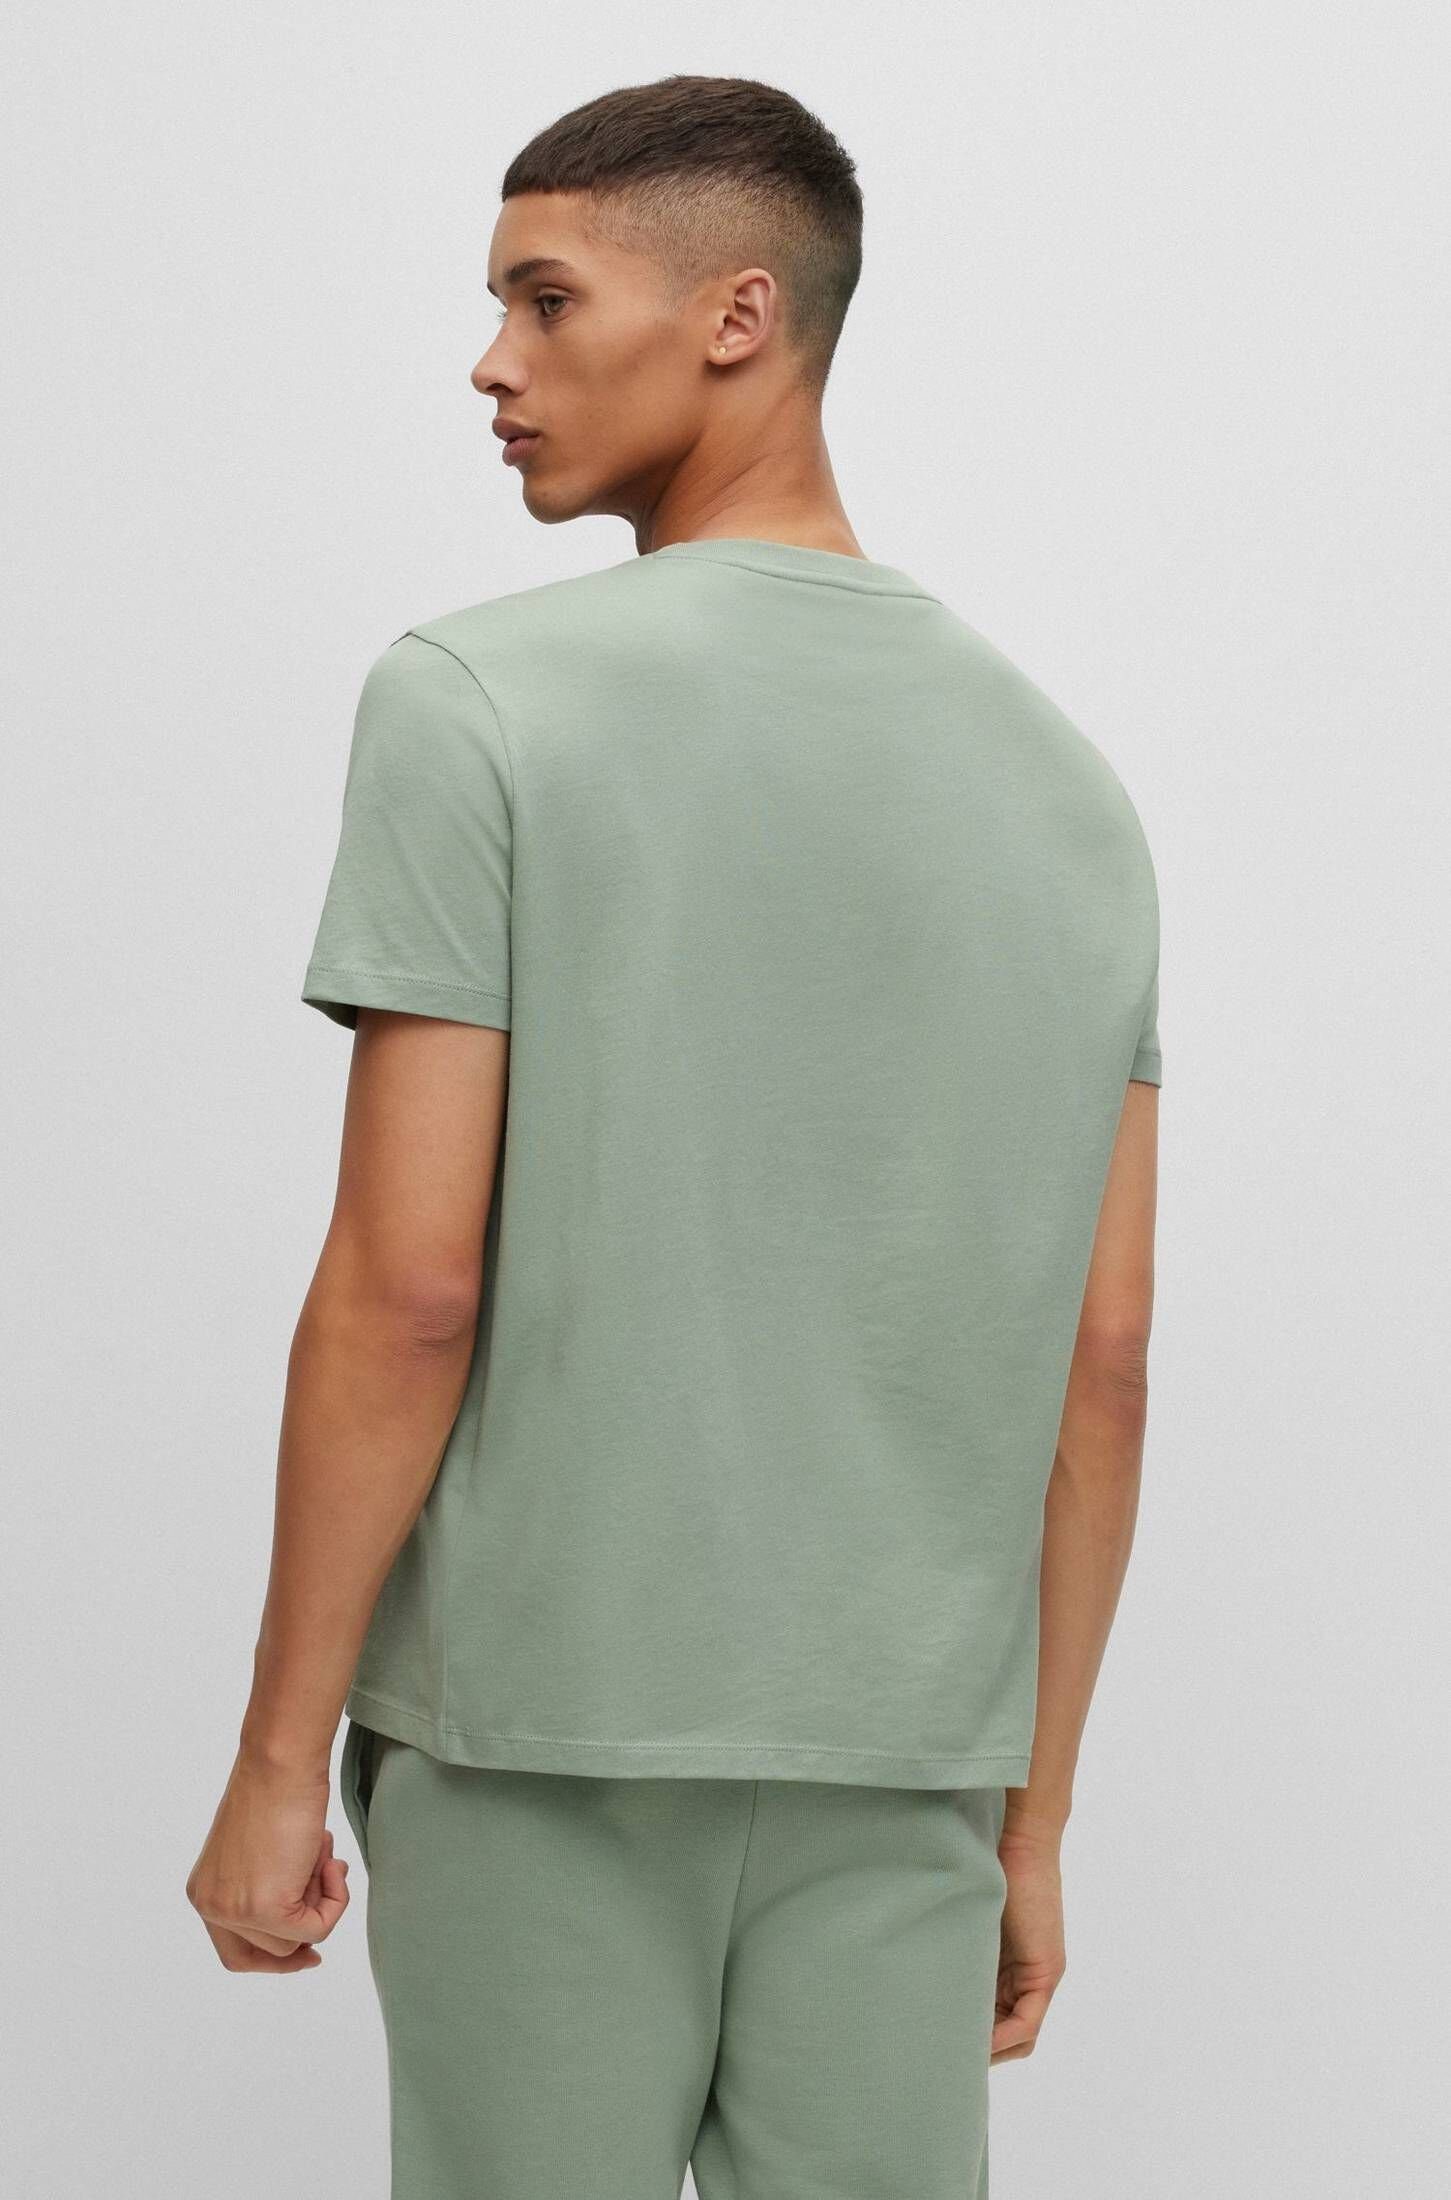 (1-tlg) T-Shirt grün DULIVIO HUGO Herren T-Shirt (400)